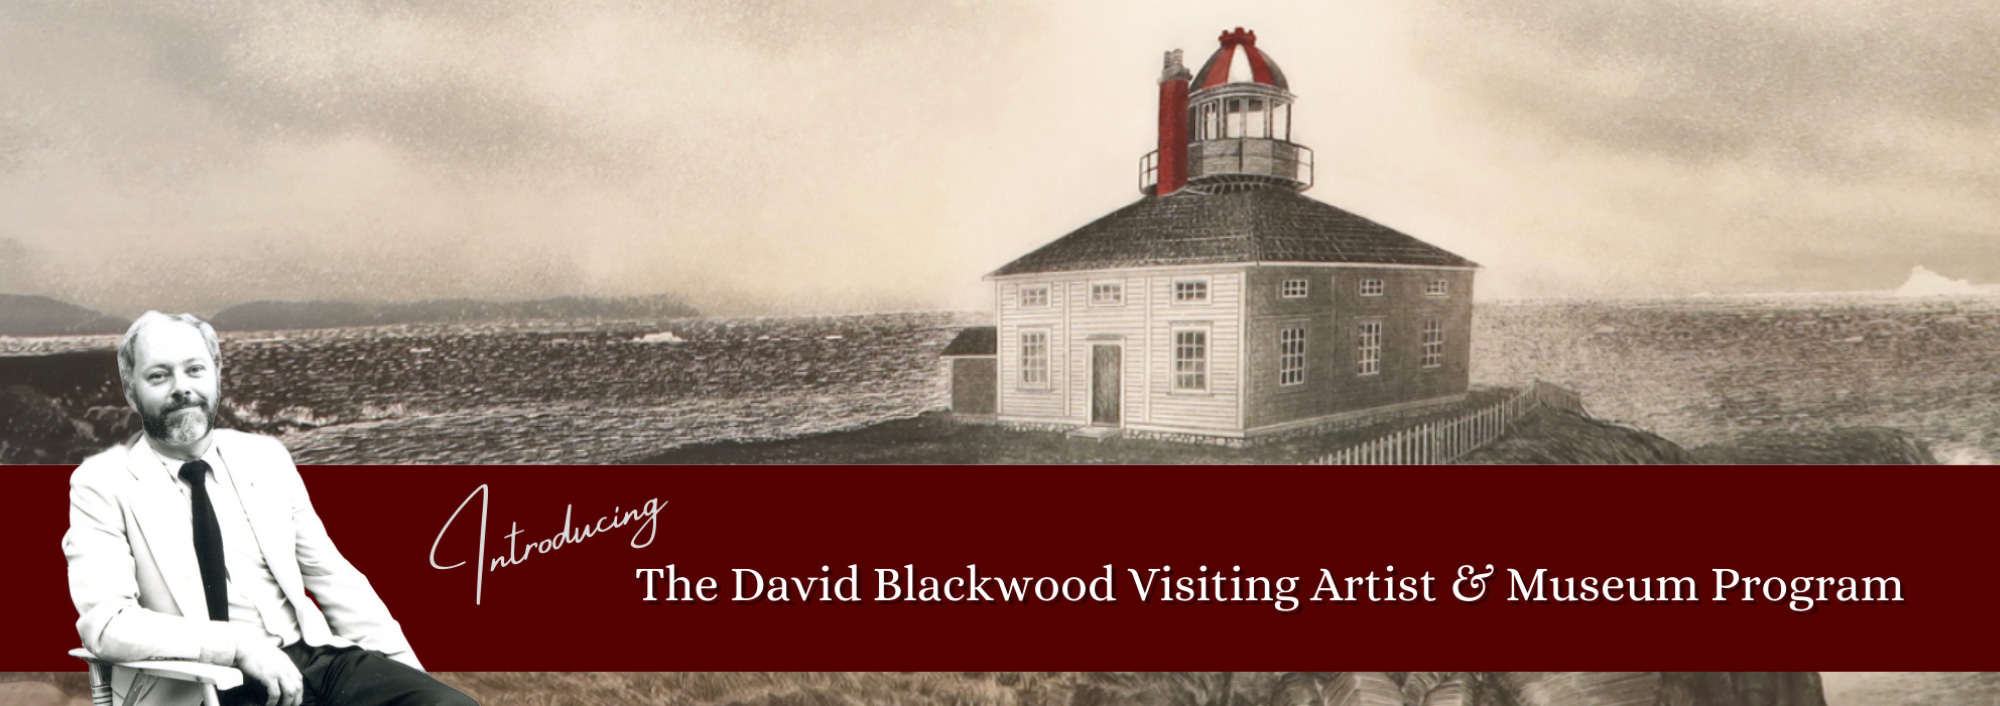 The David Blackwood Visiting Artist & Museum Program